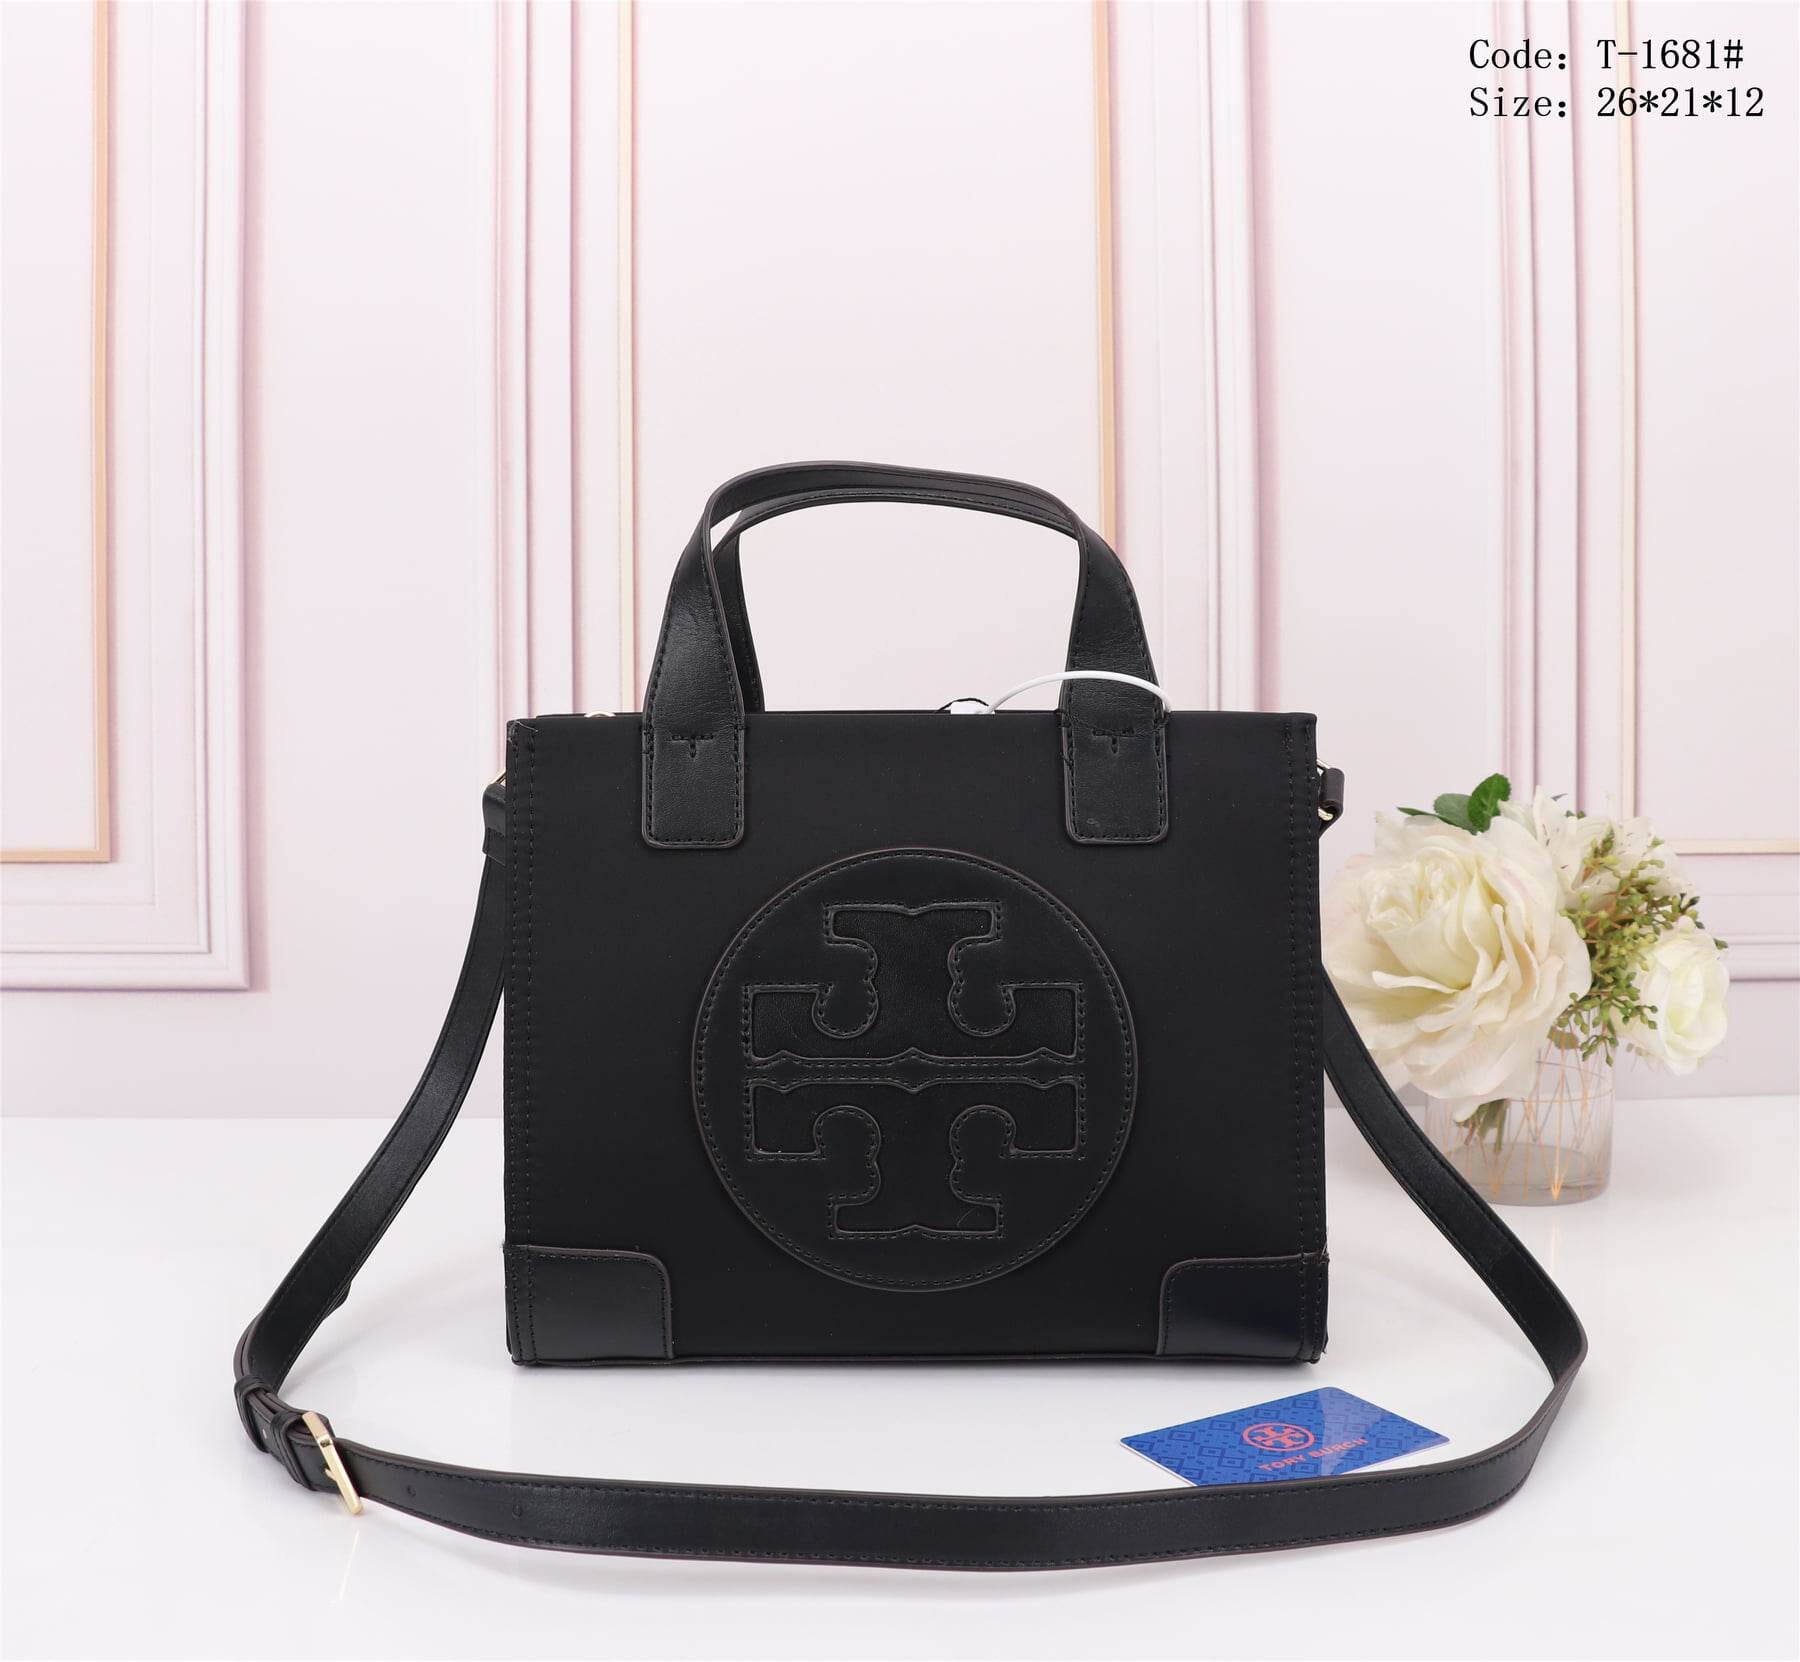 TB1681 Casual Handbag With Sling StyleMoto Black Plain 